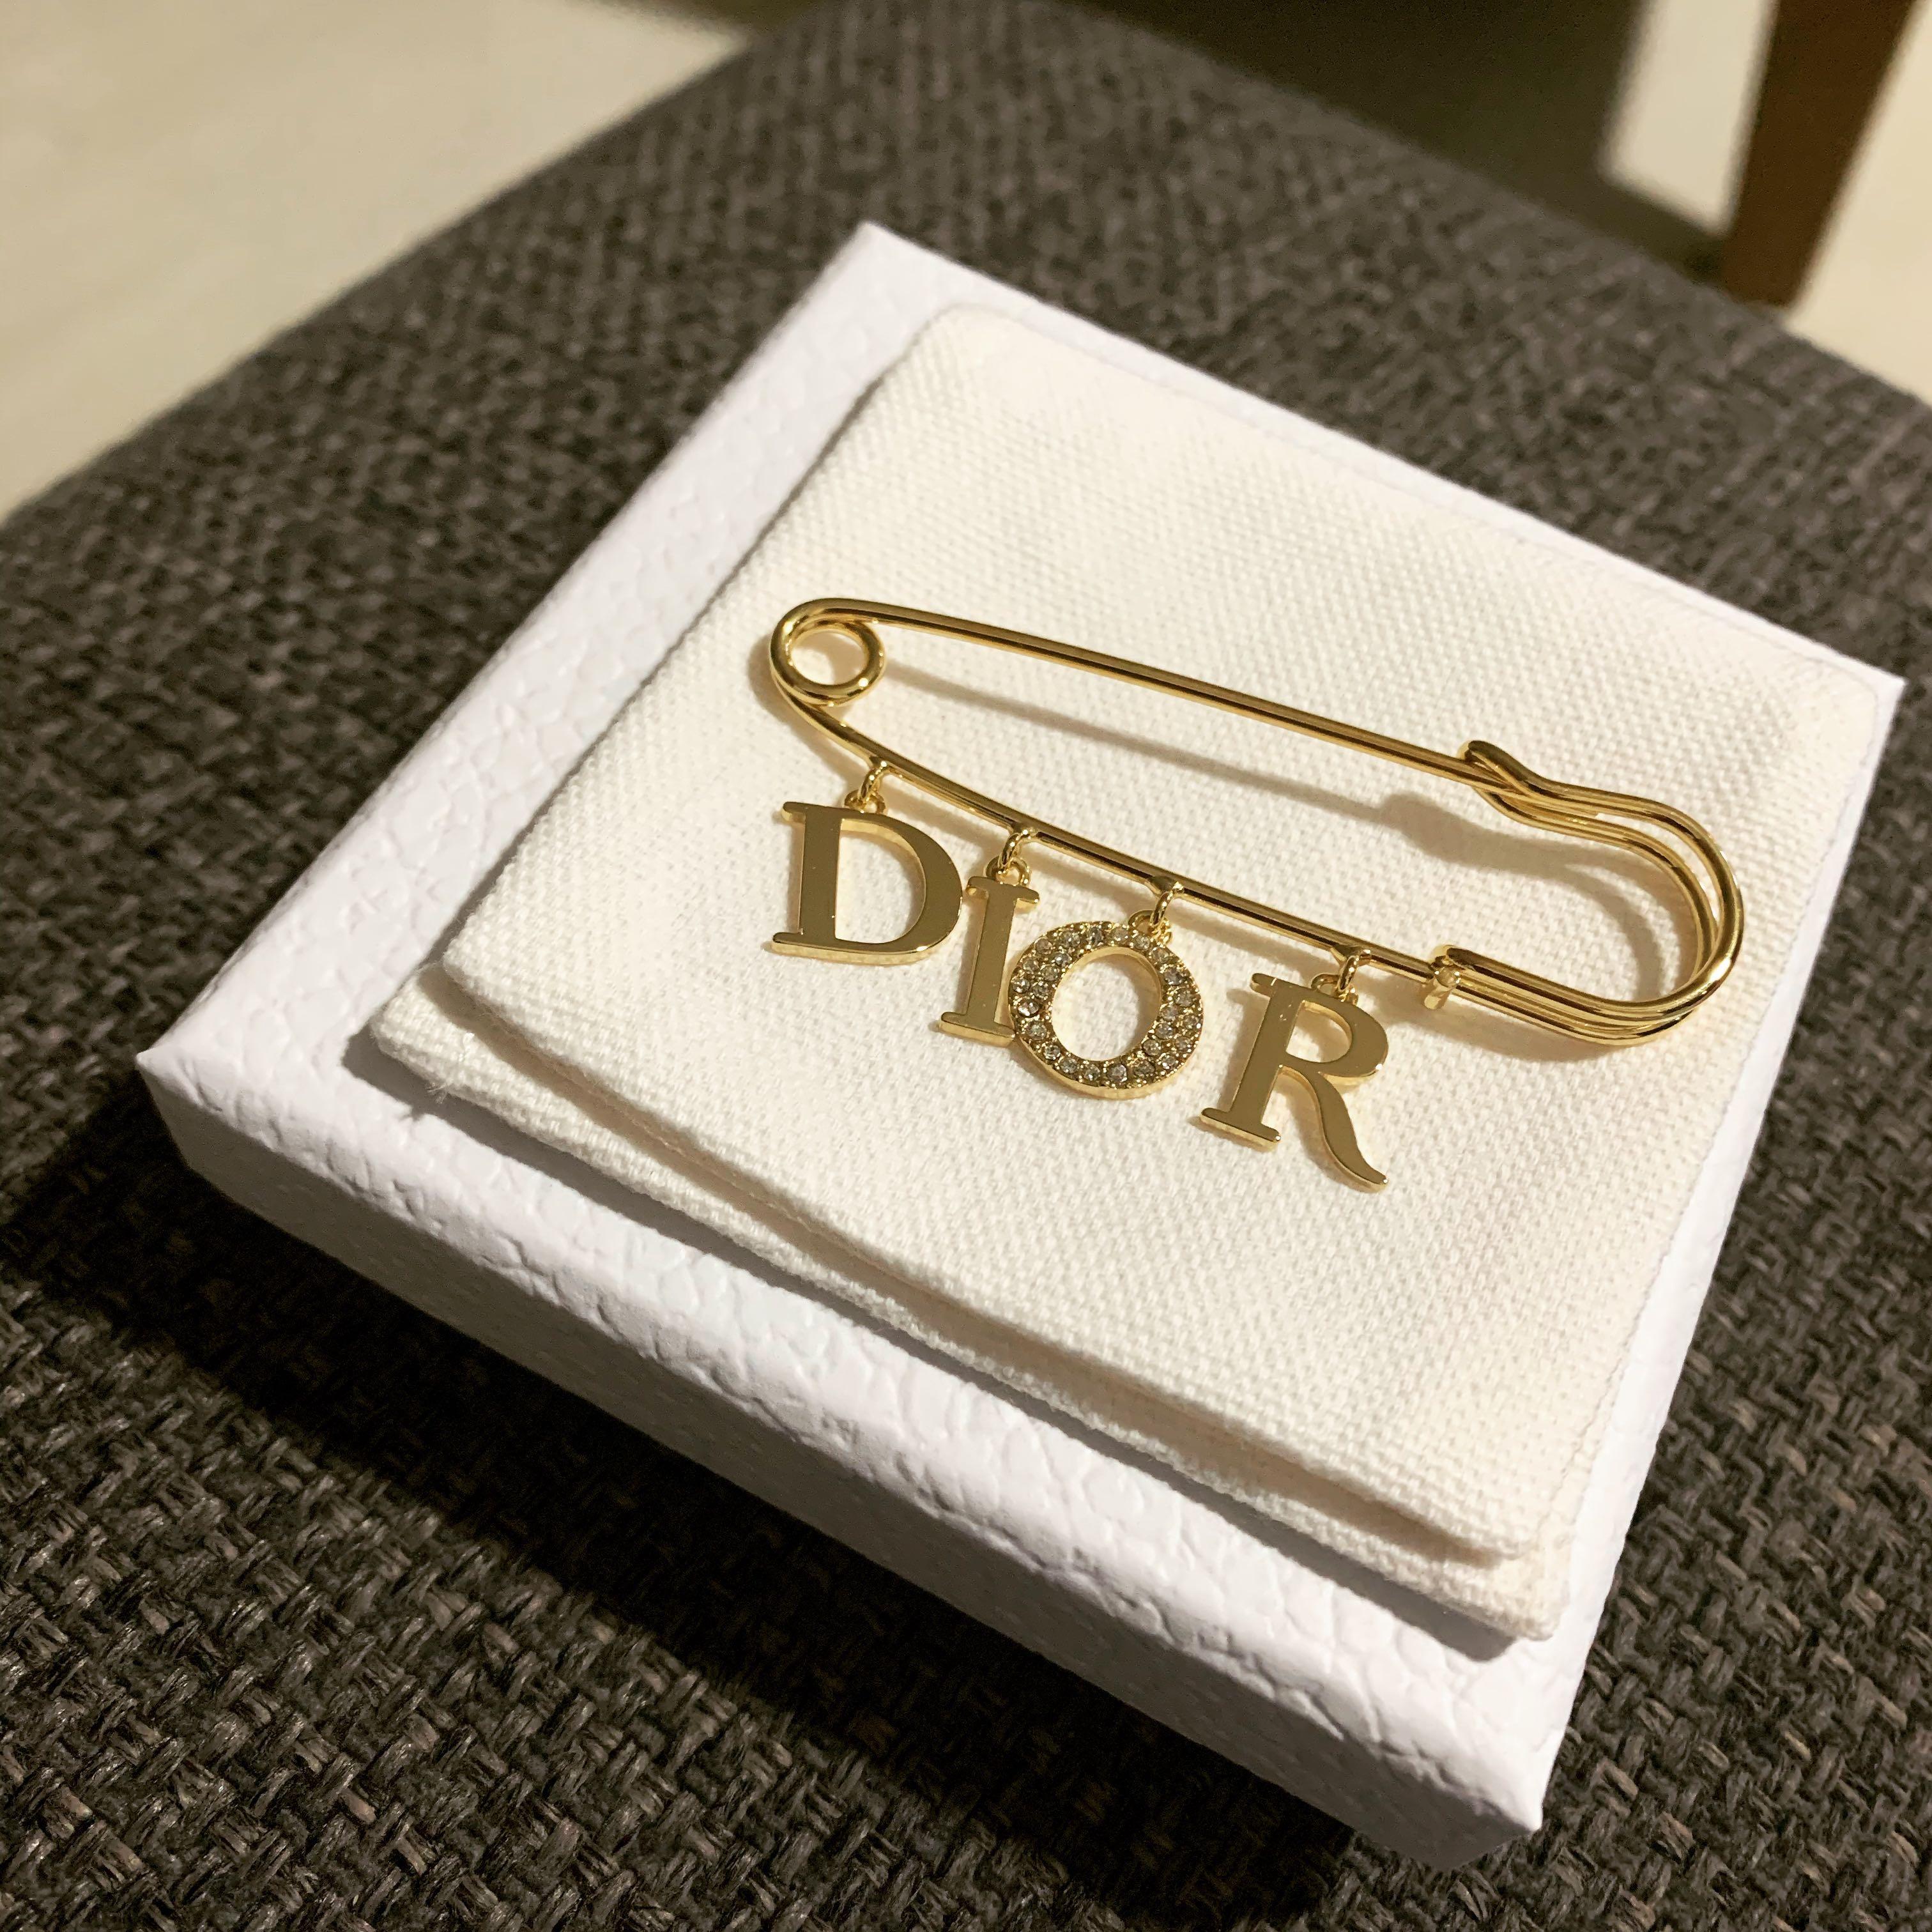 dior brooch price